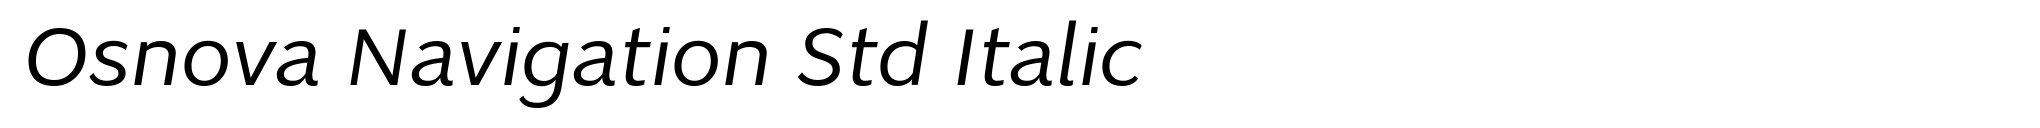 Osnova Navigation Std Italic image